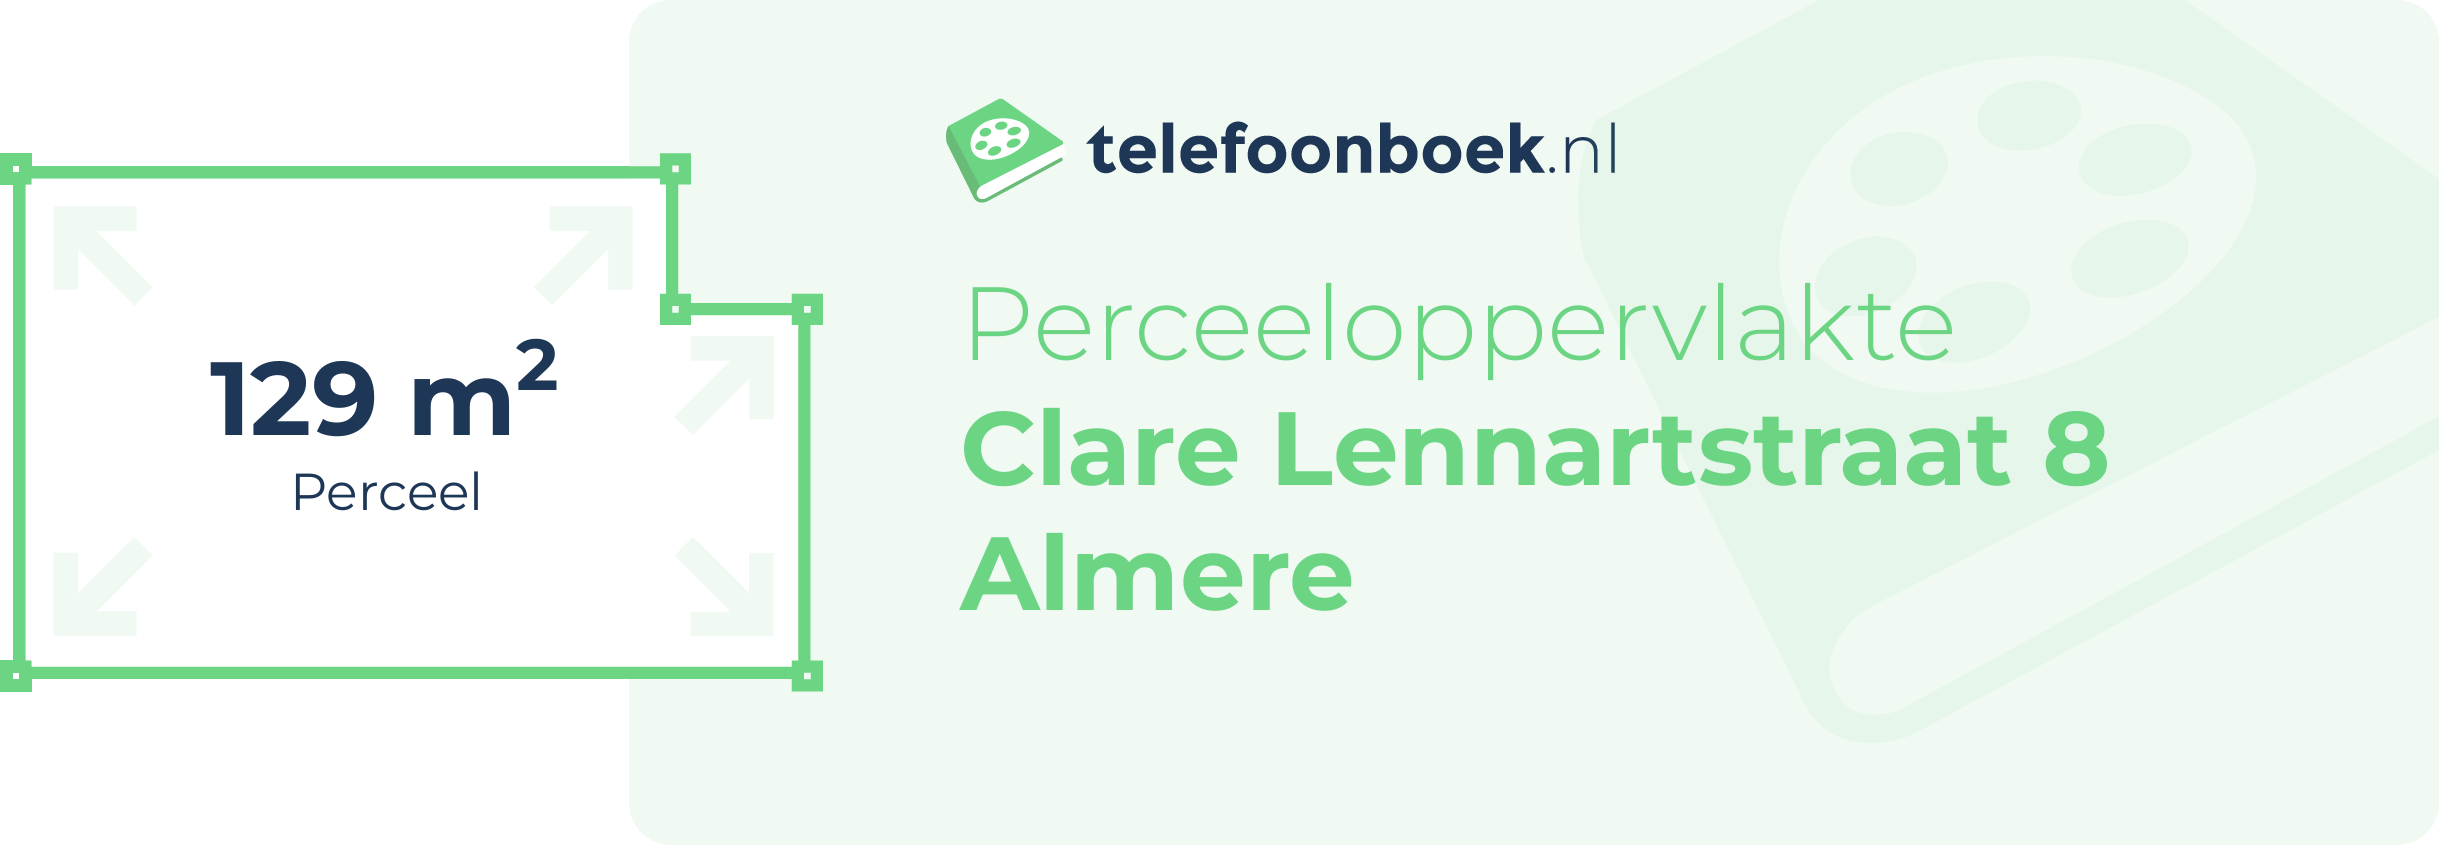 Perceeloppervlakte Clare Lennartstraat 8 Almere